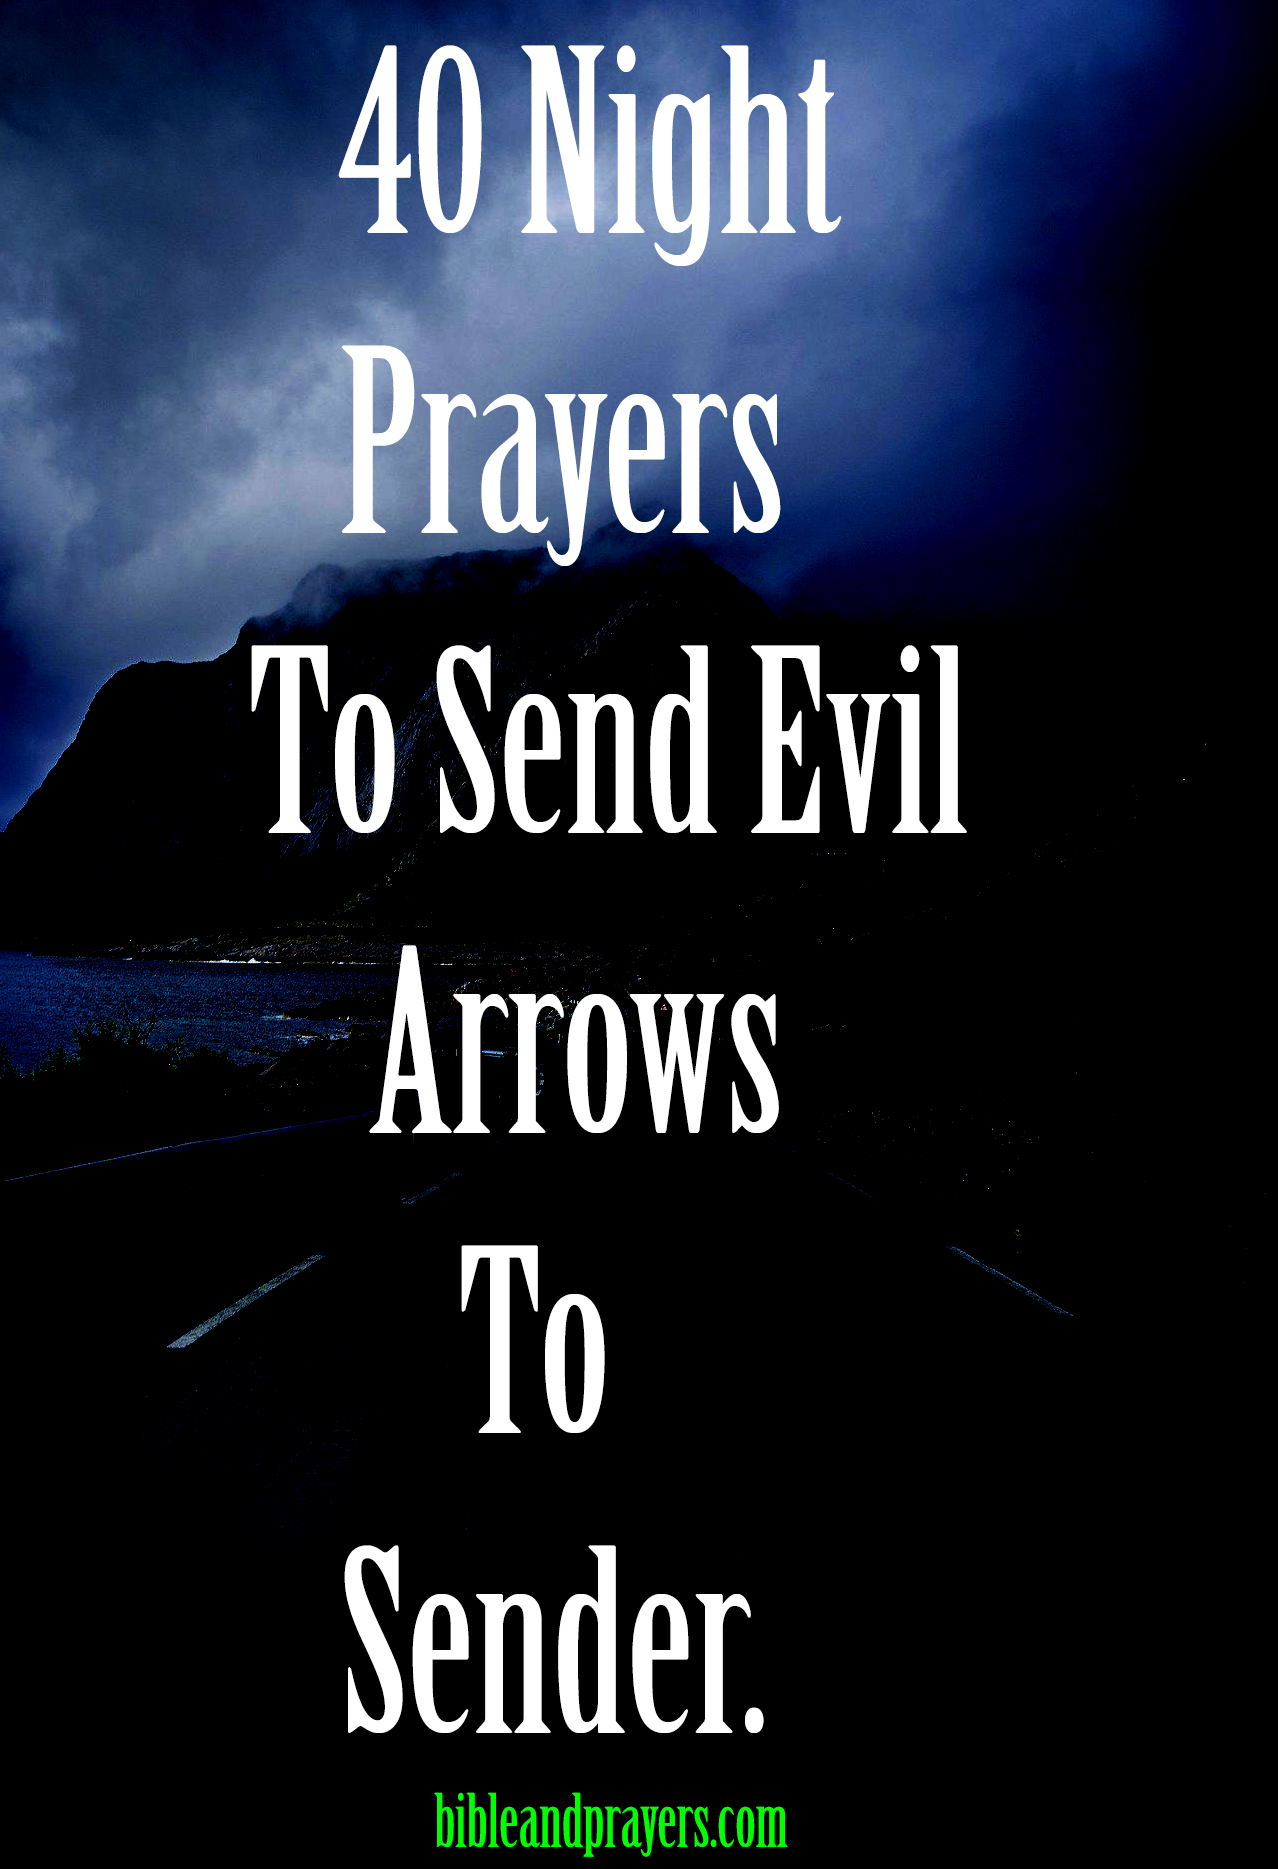 40 Night Prayers To Send Evil Arrows To Sender.